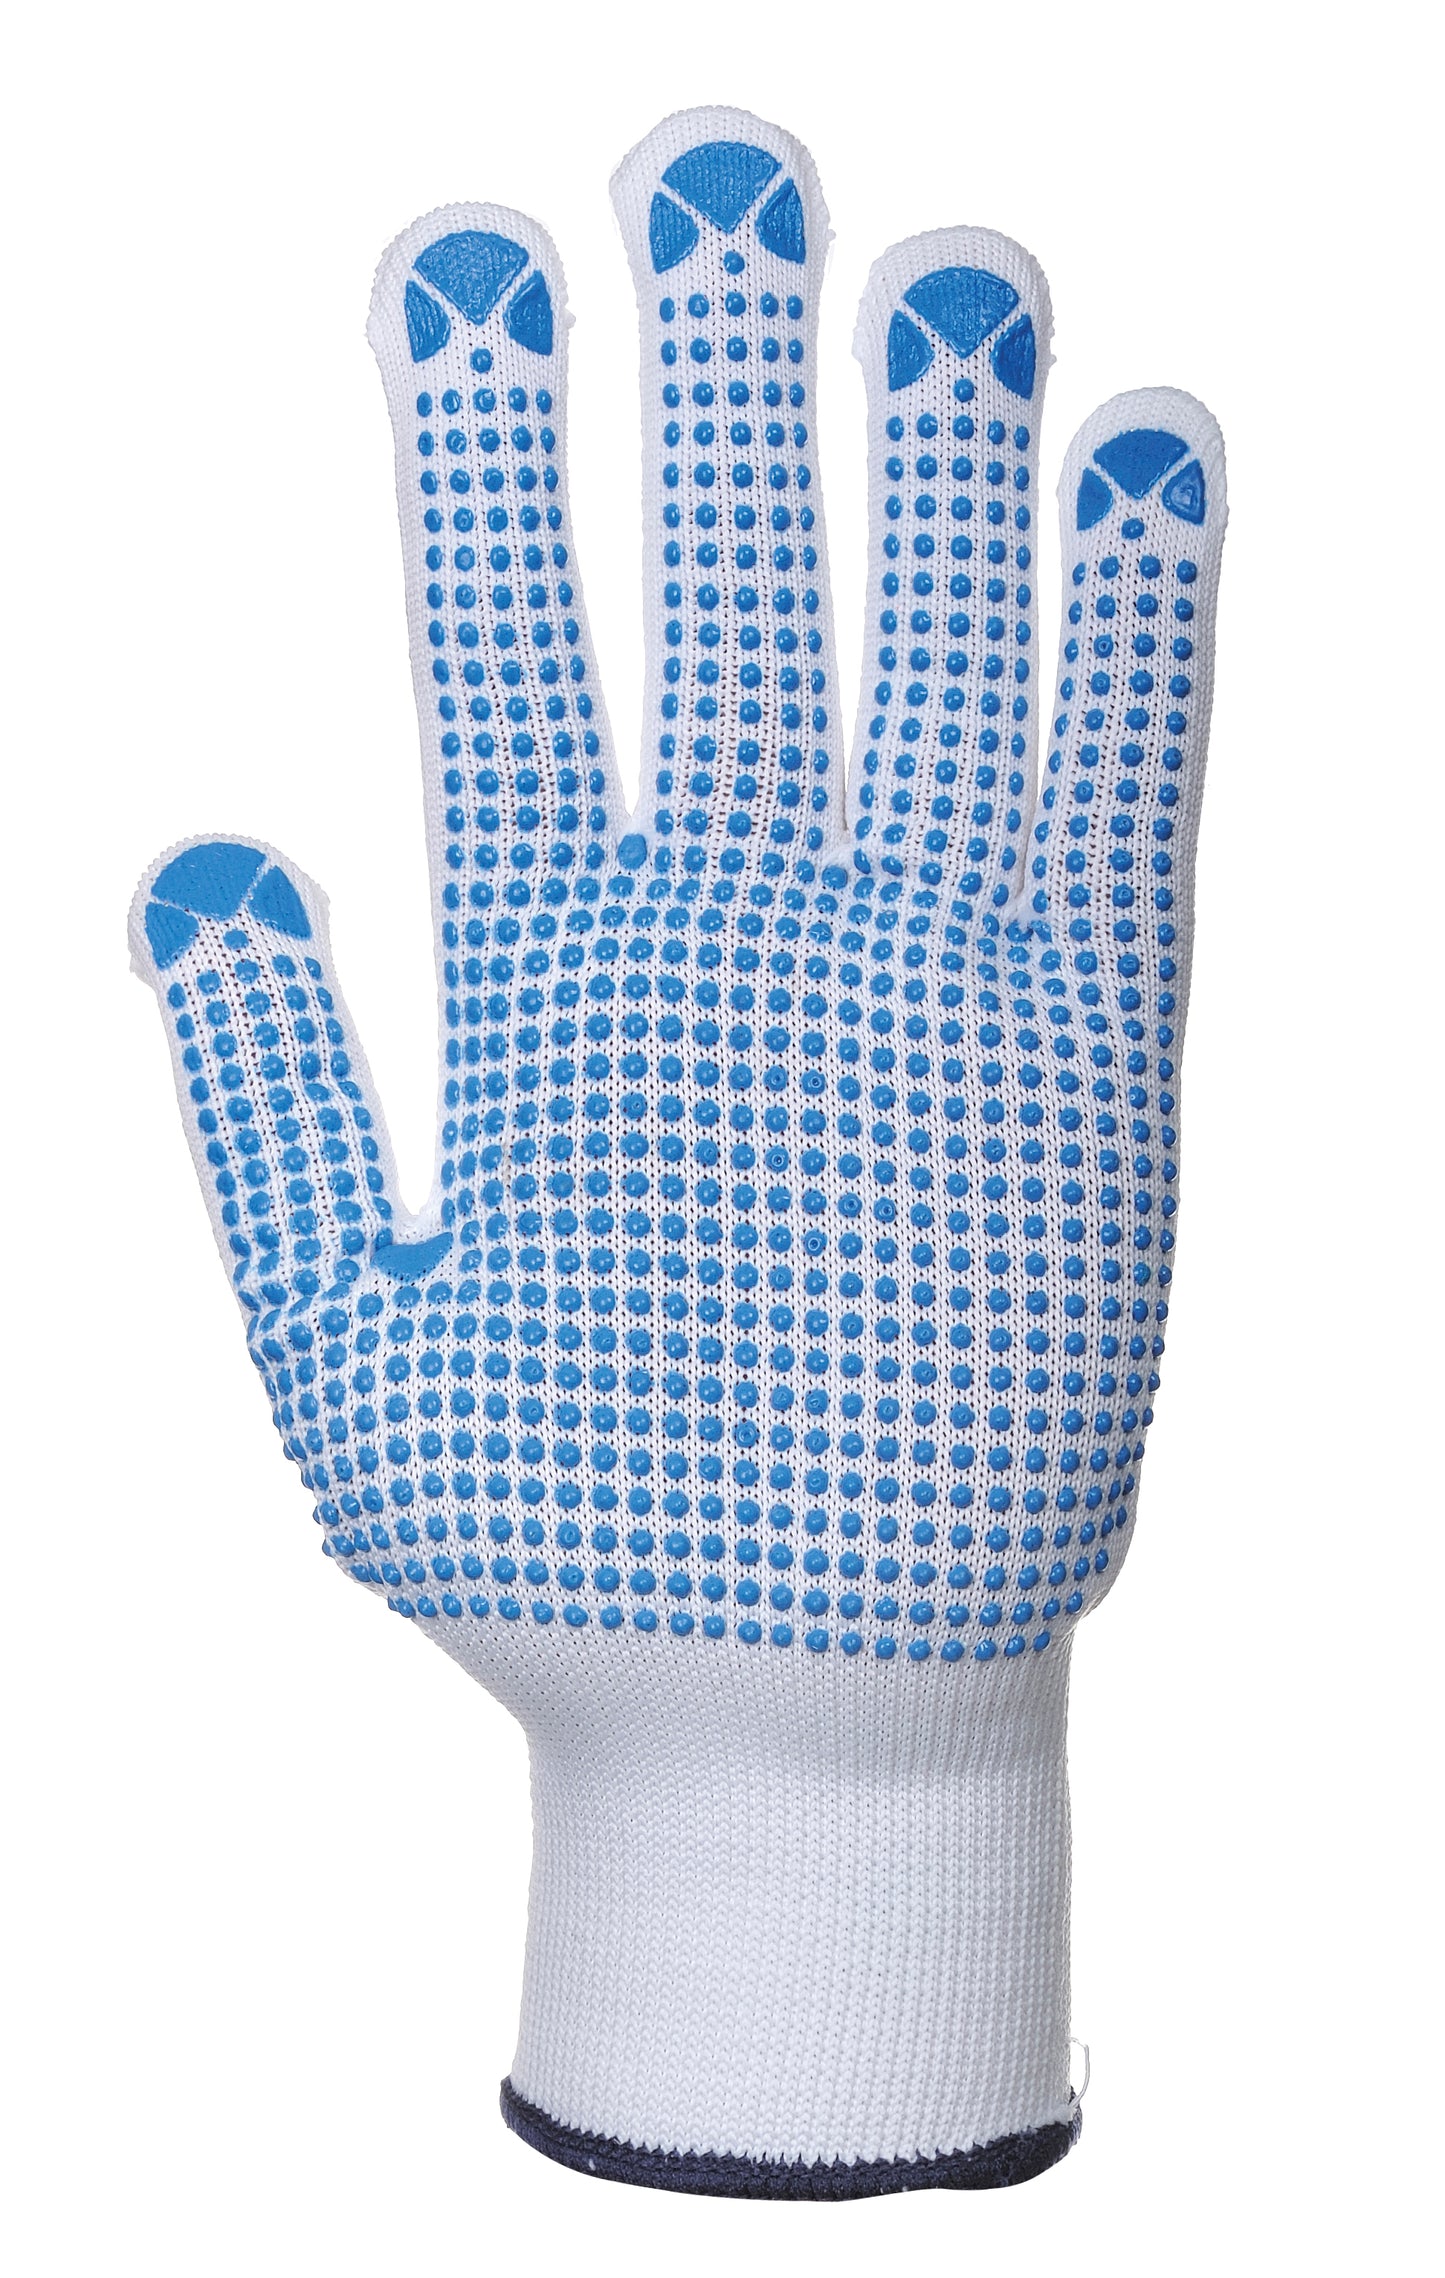 Polka Dot Glove Blue/White - A110 Palm 